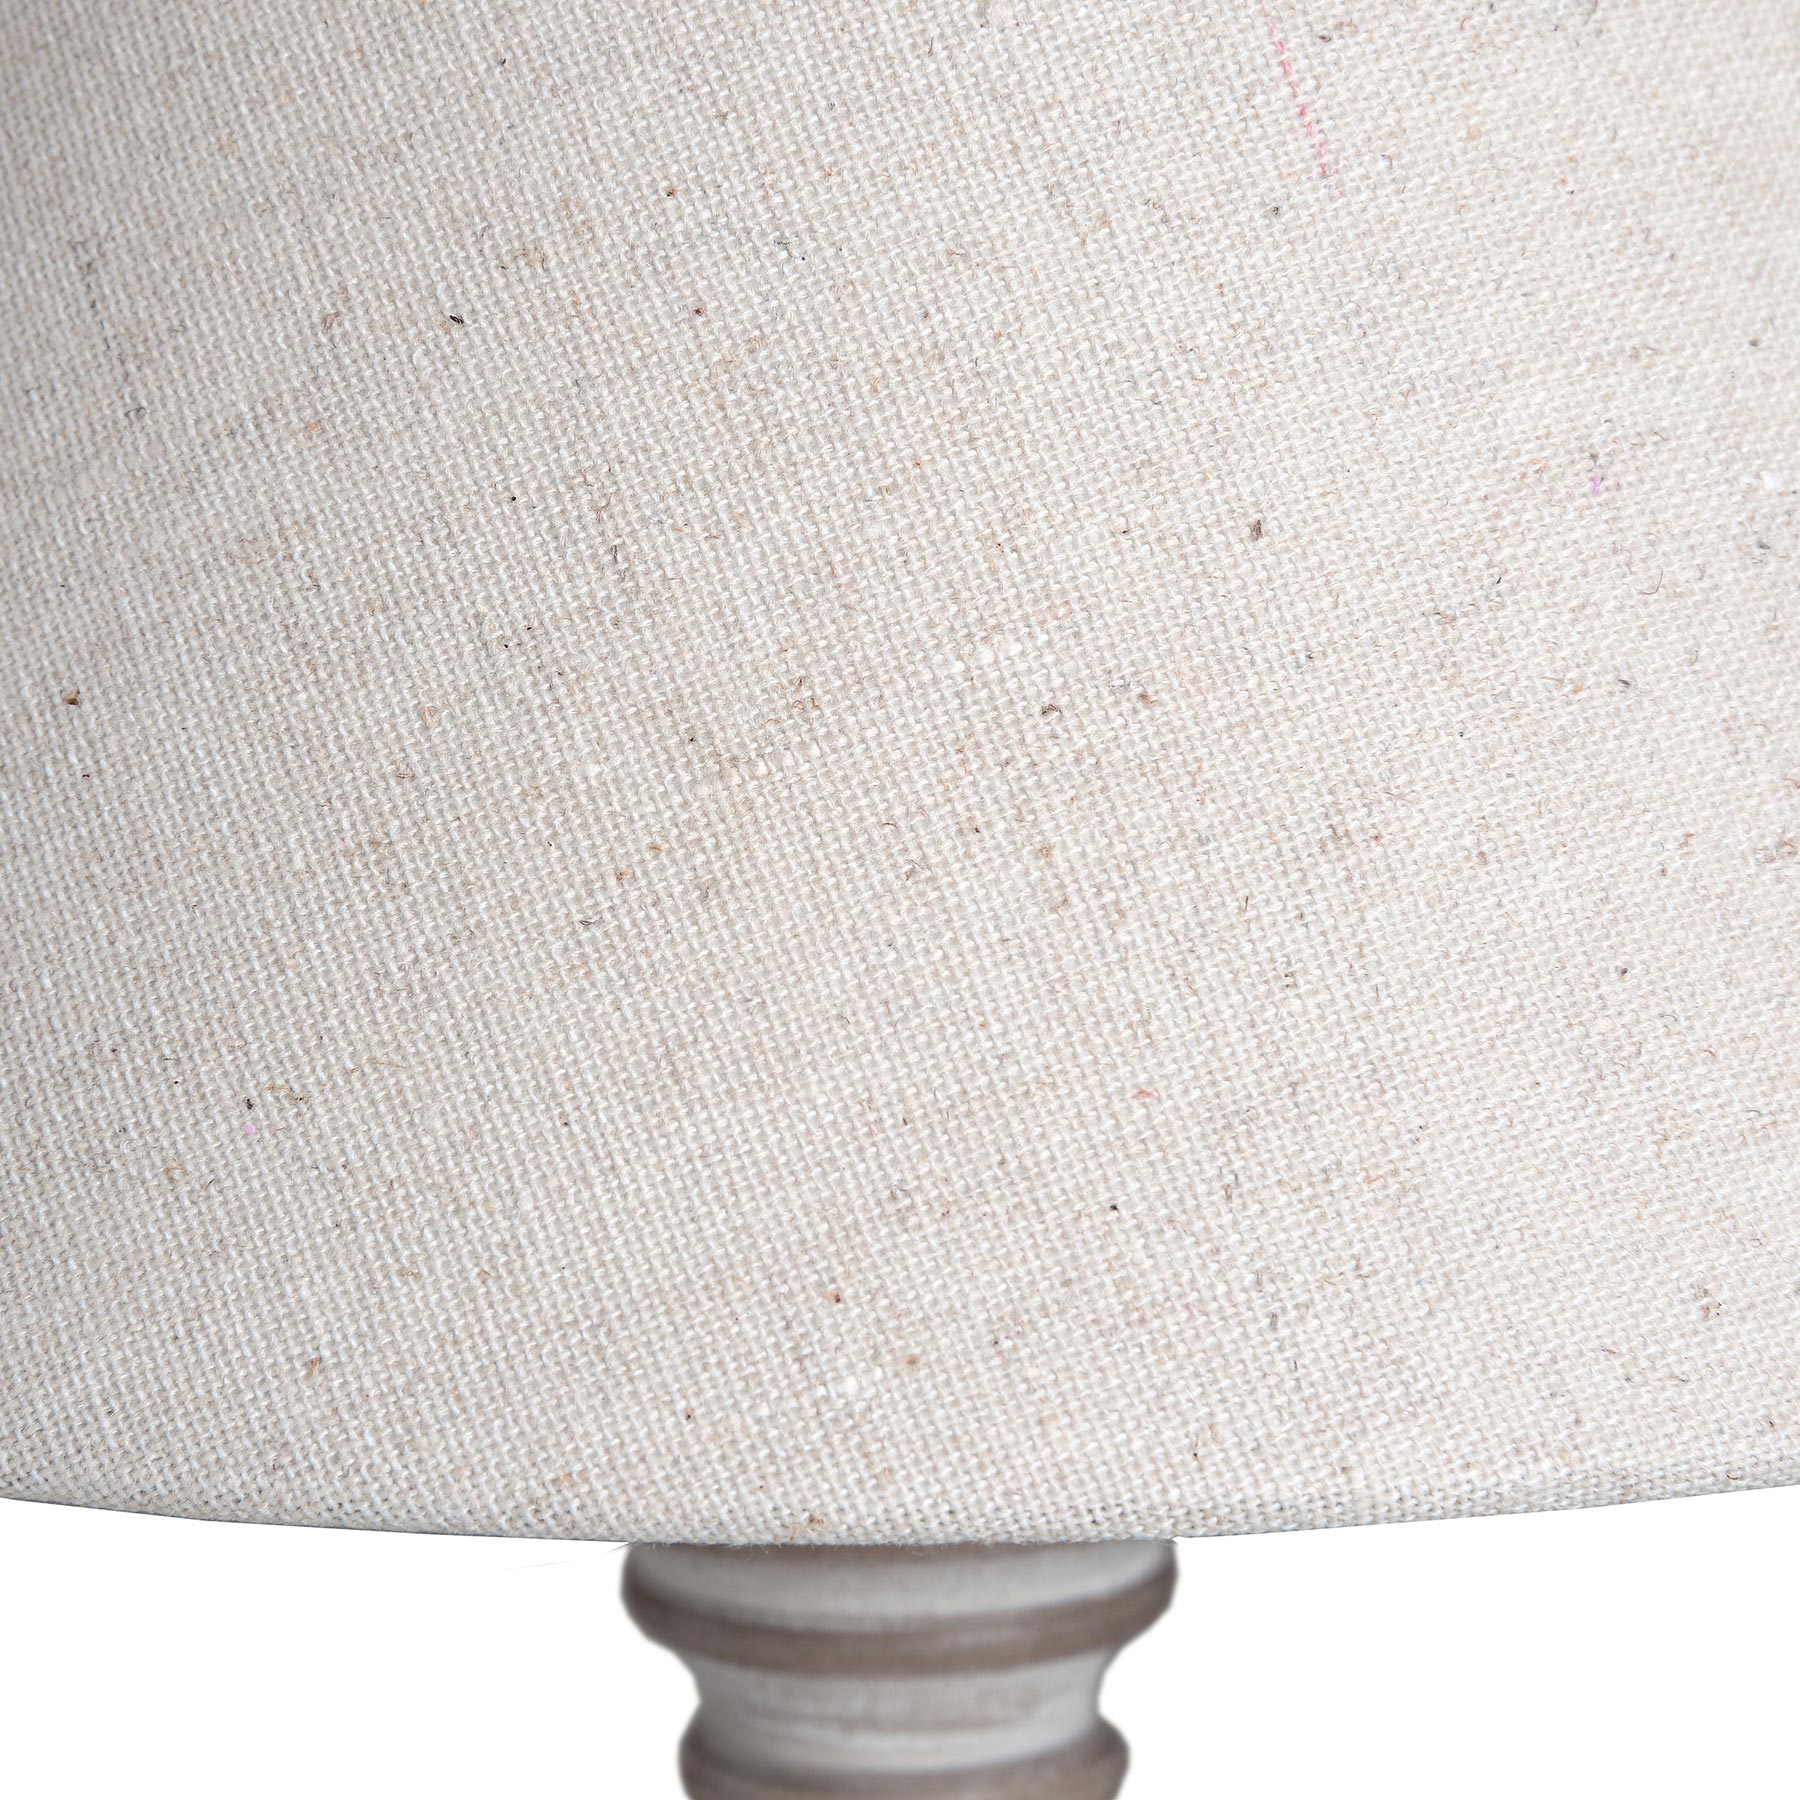 Pella Table Lamp - Image 3